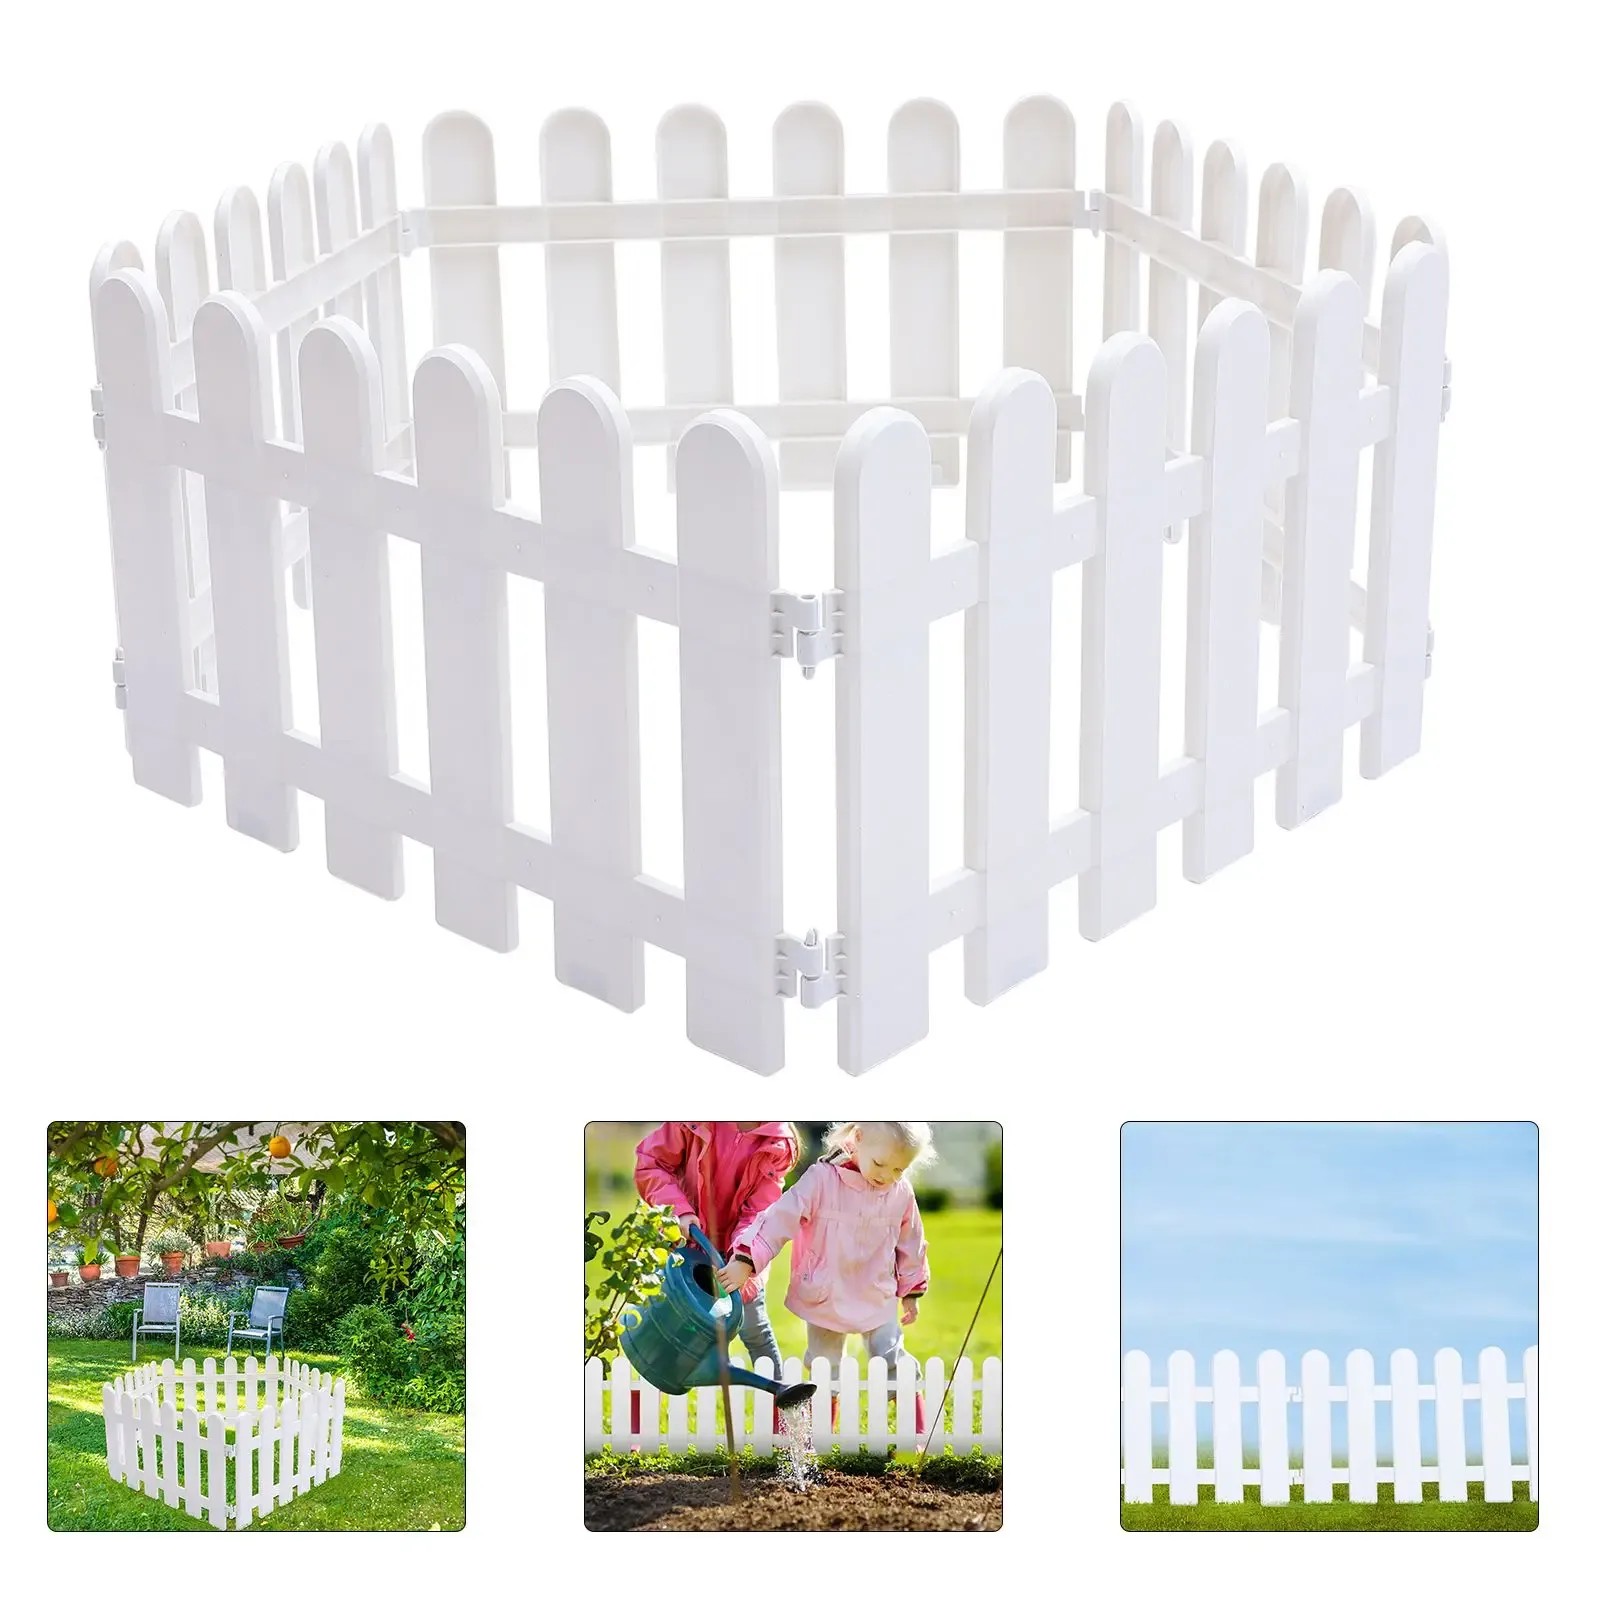 Gates 5st Garden Picket Fence Plastic White Edgings Dekorativa landskapsväg Paneler Utomhus Lawn Protective Guard Patio Edging